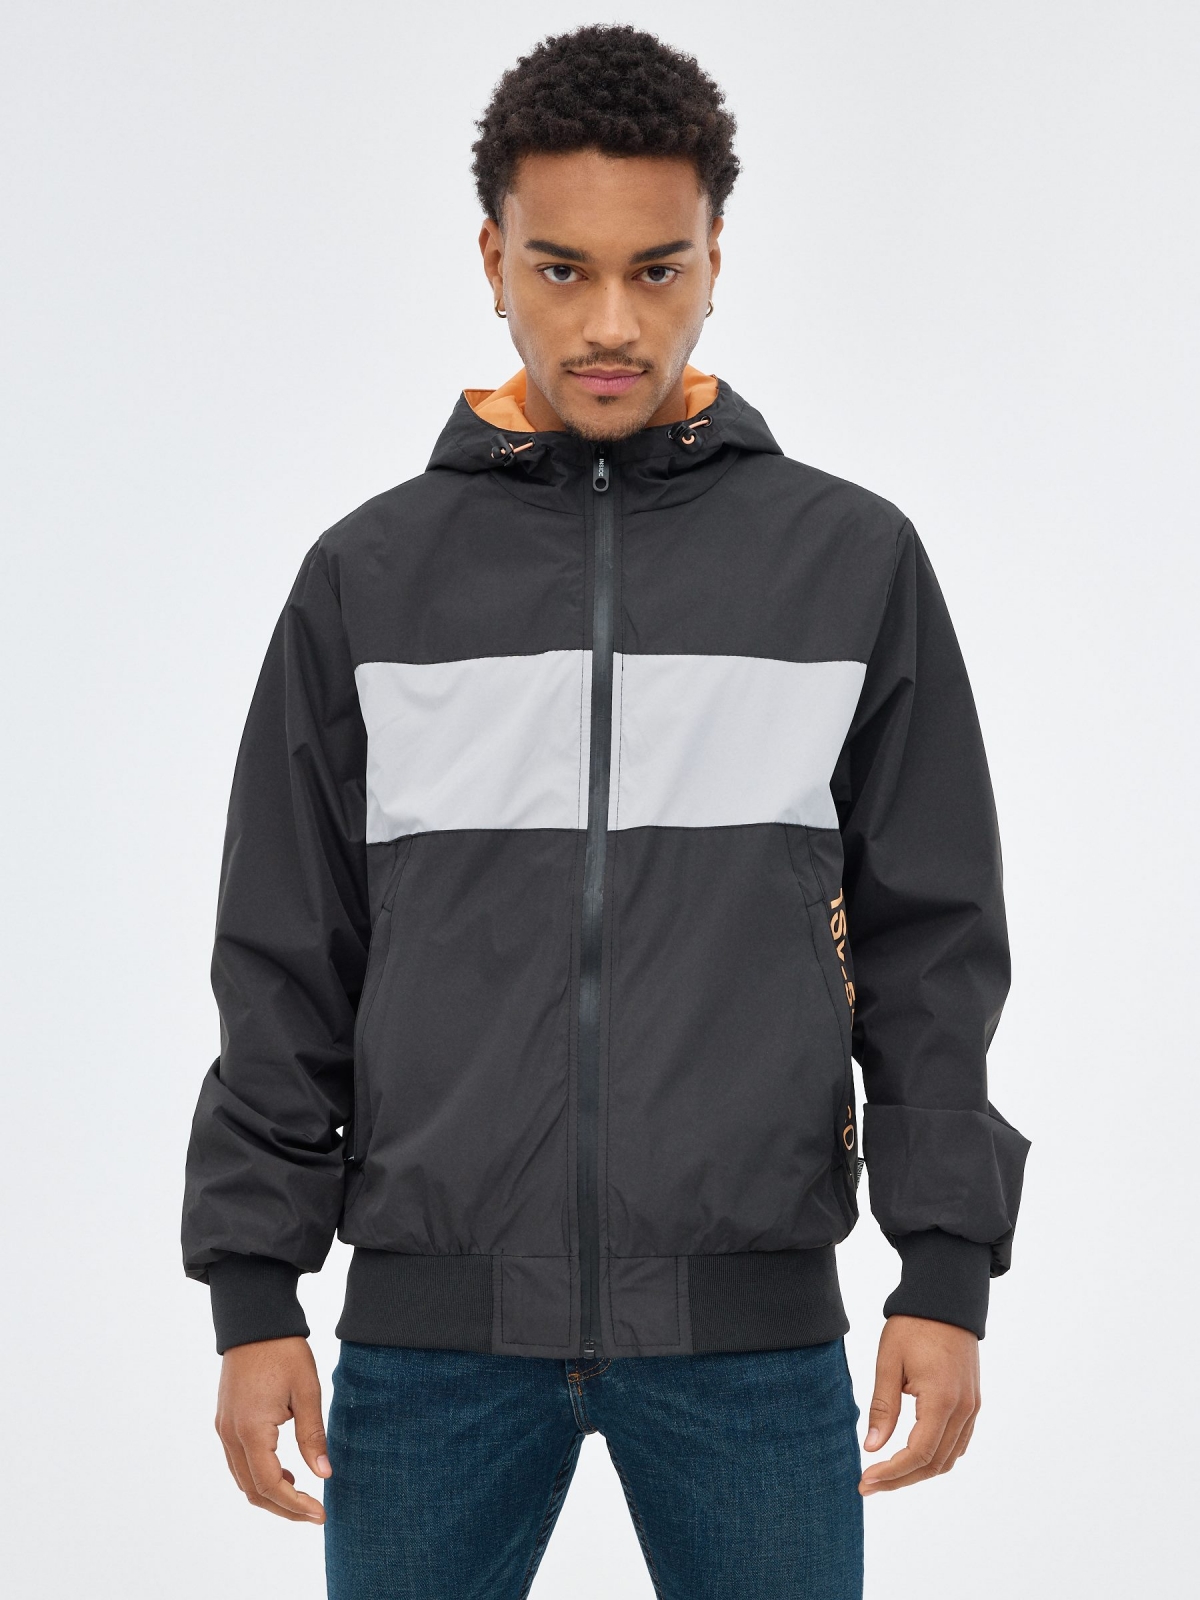 Lightweight nylon jacket B/W dark grey middle front view